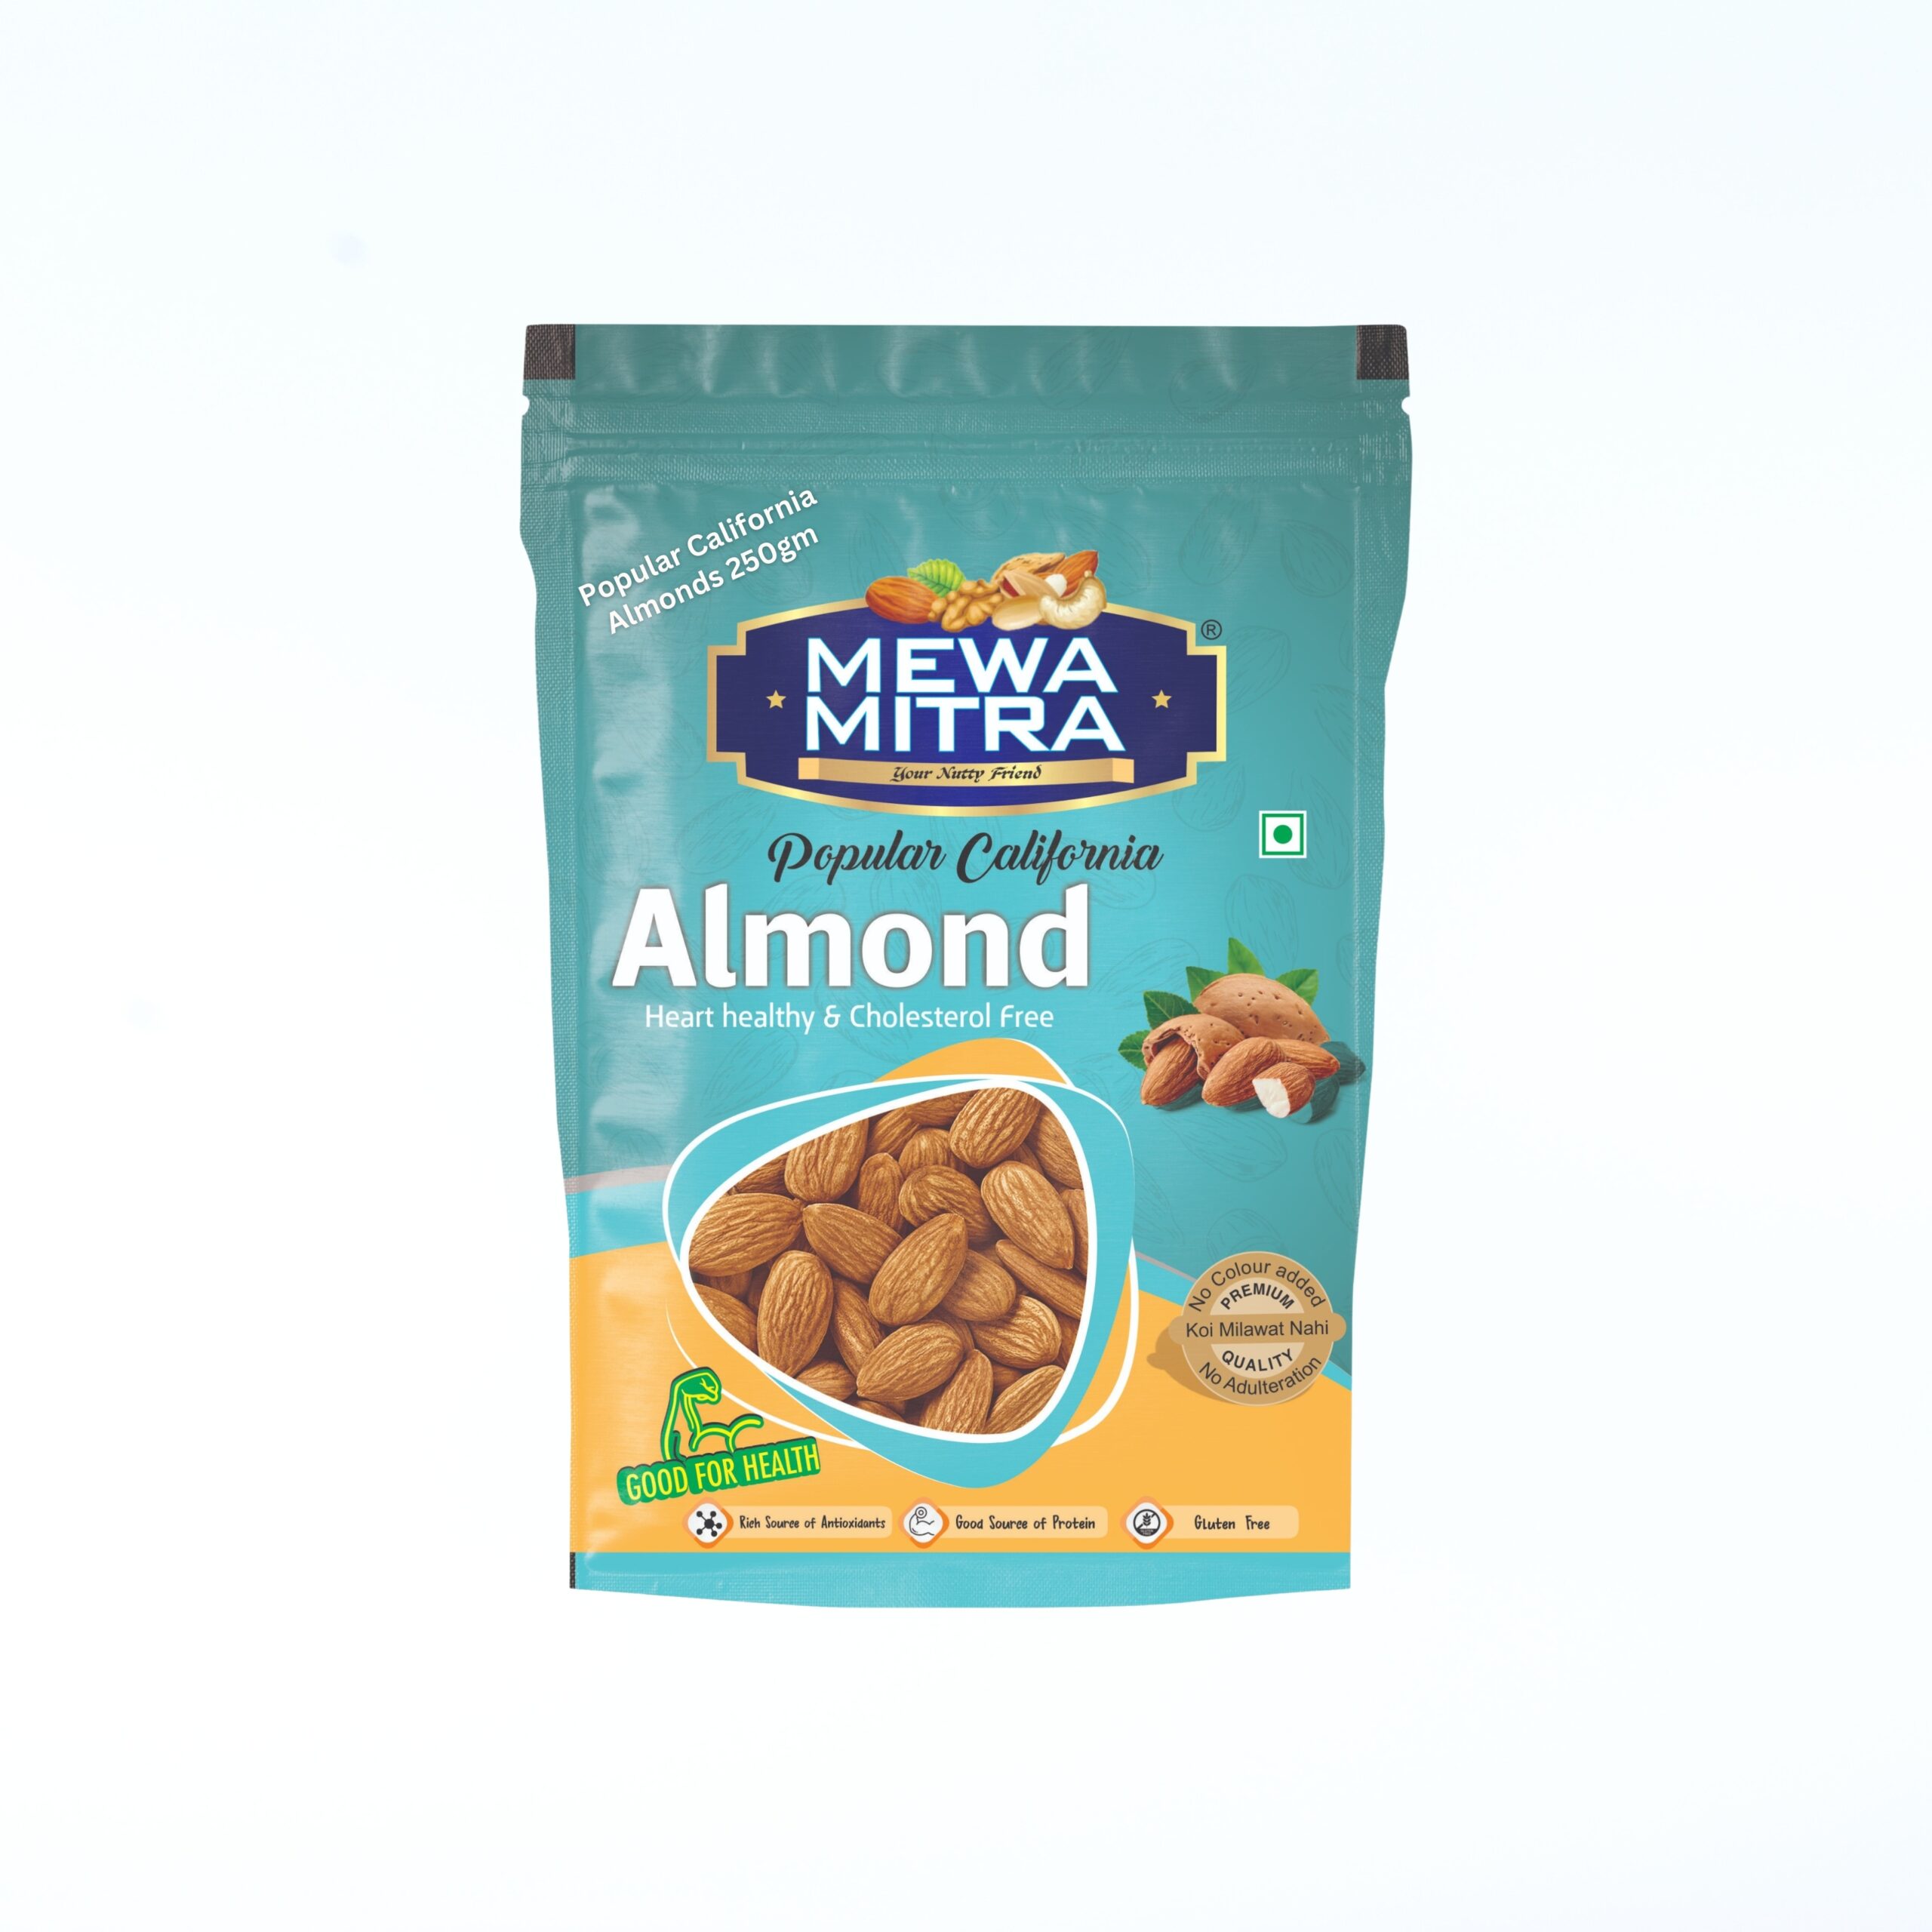 popular california almonds